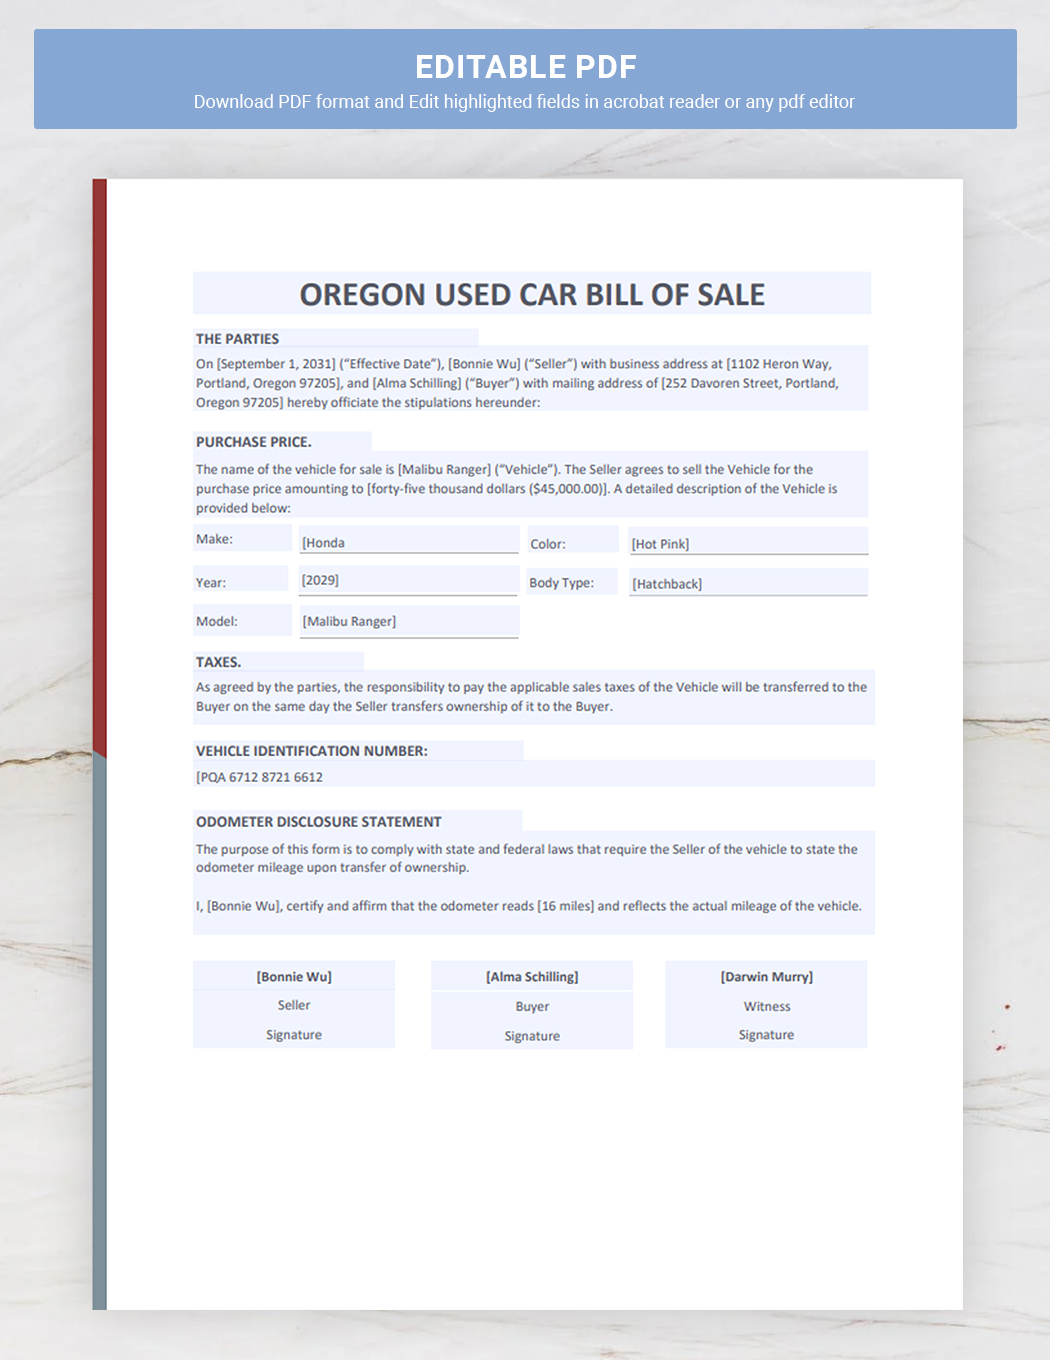 Oregon Used Car Bill of Sale Template